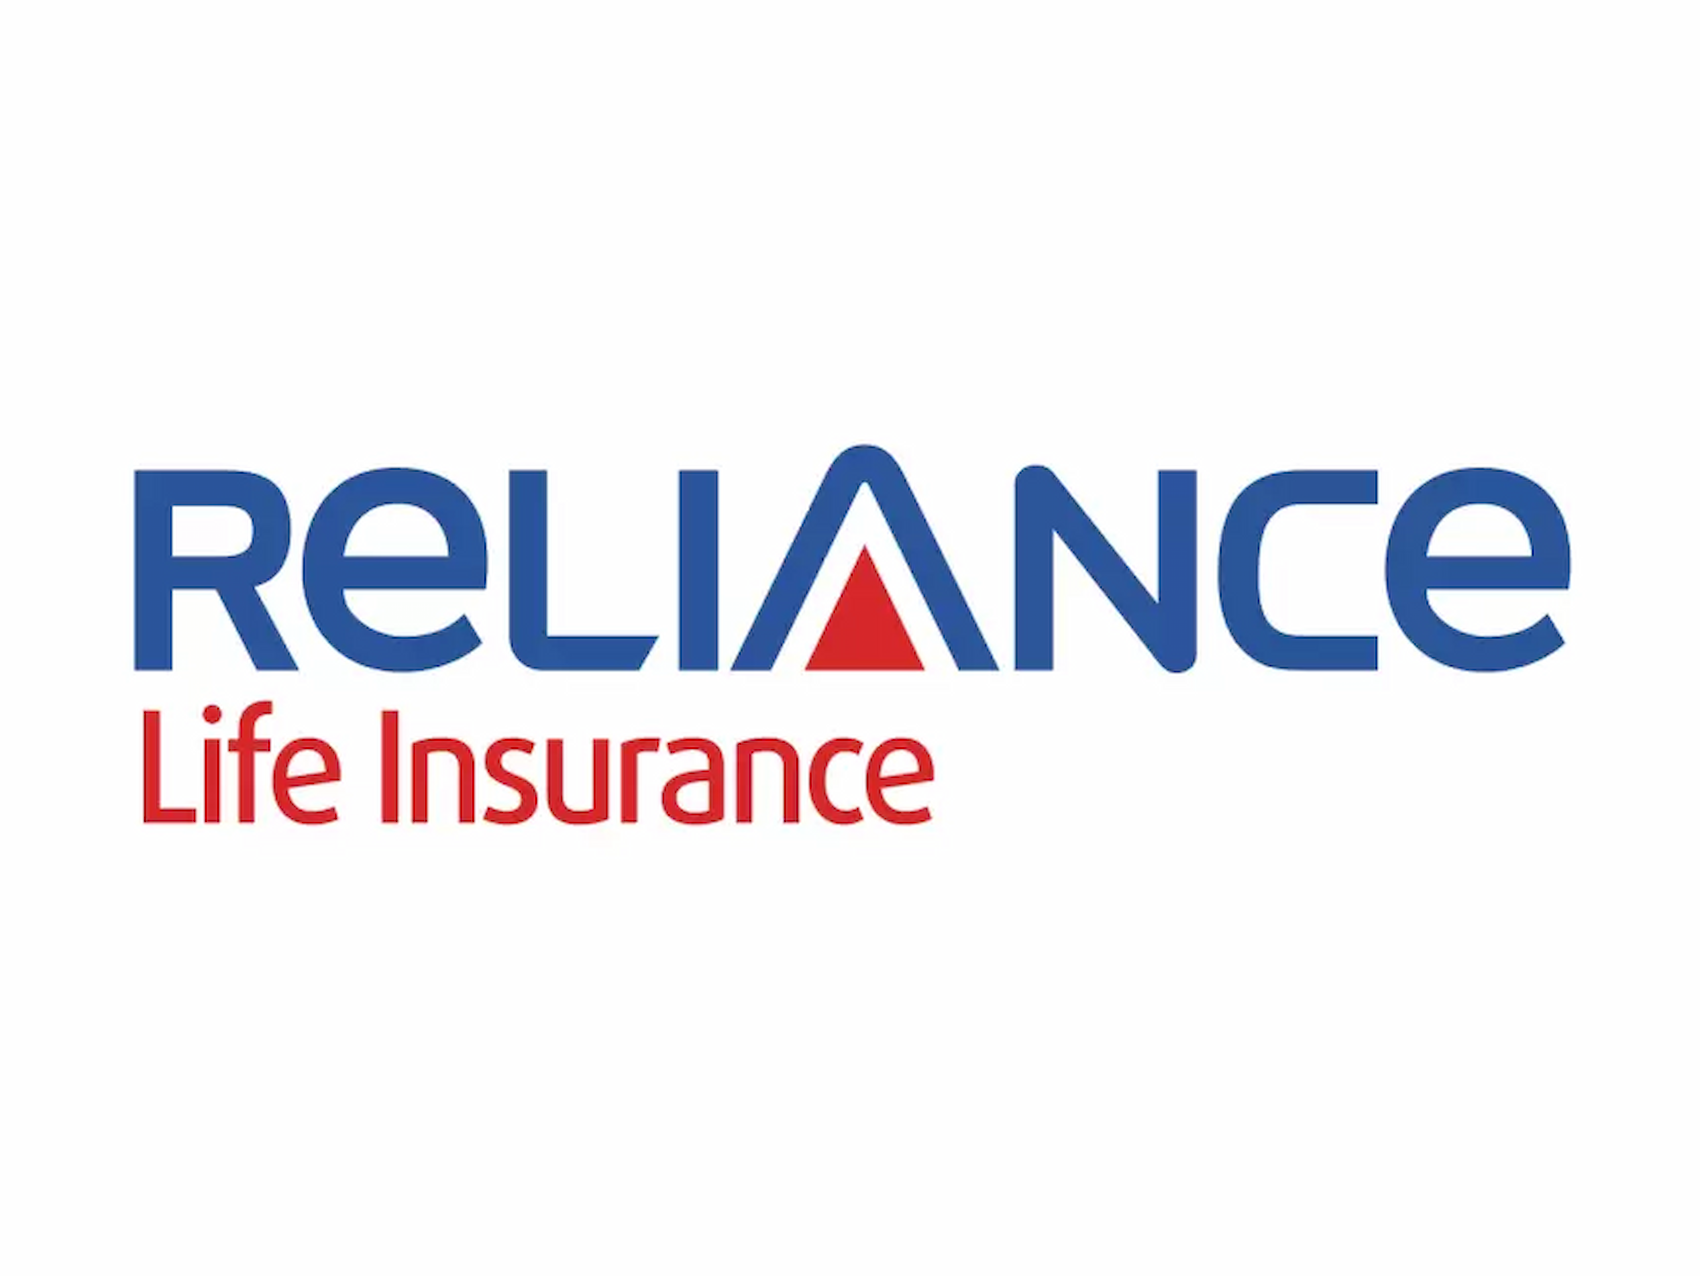 life insurance logos